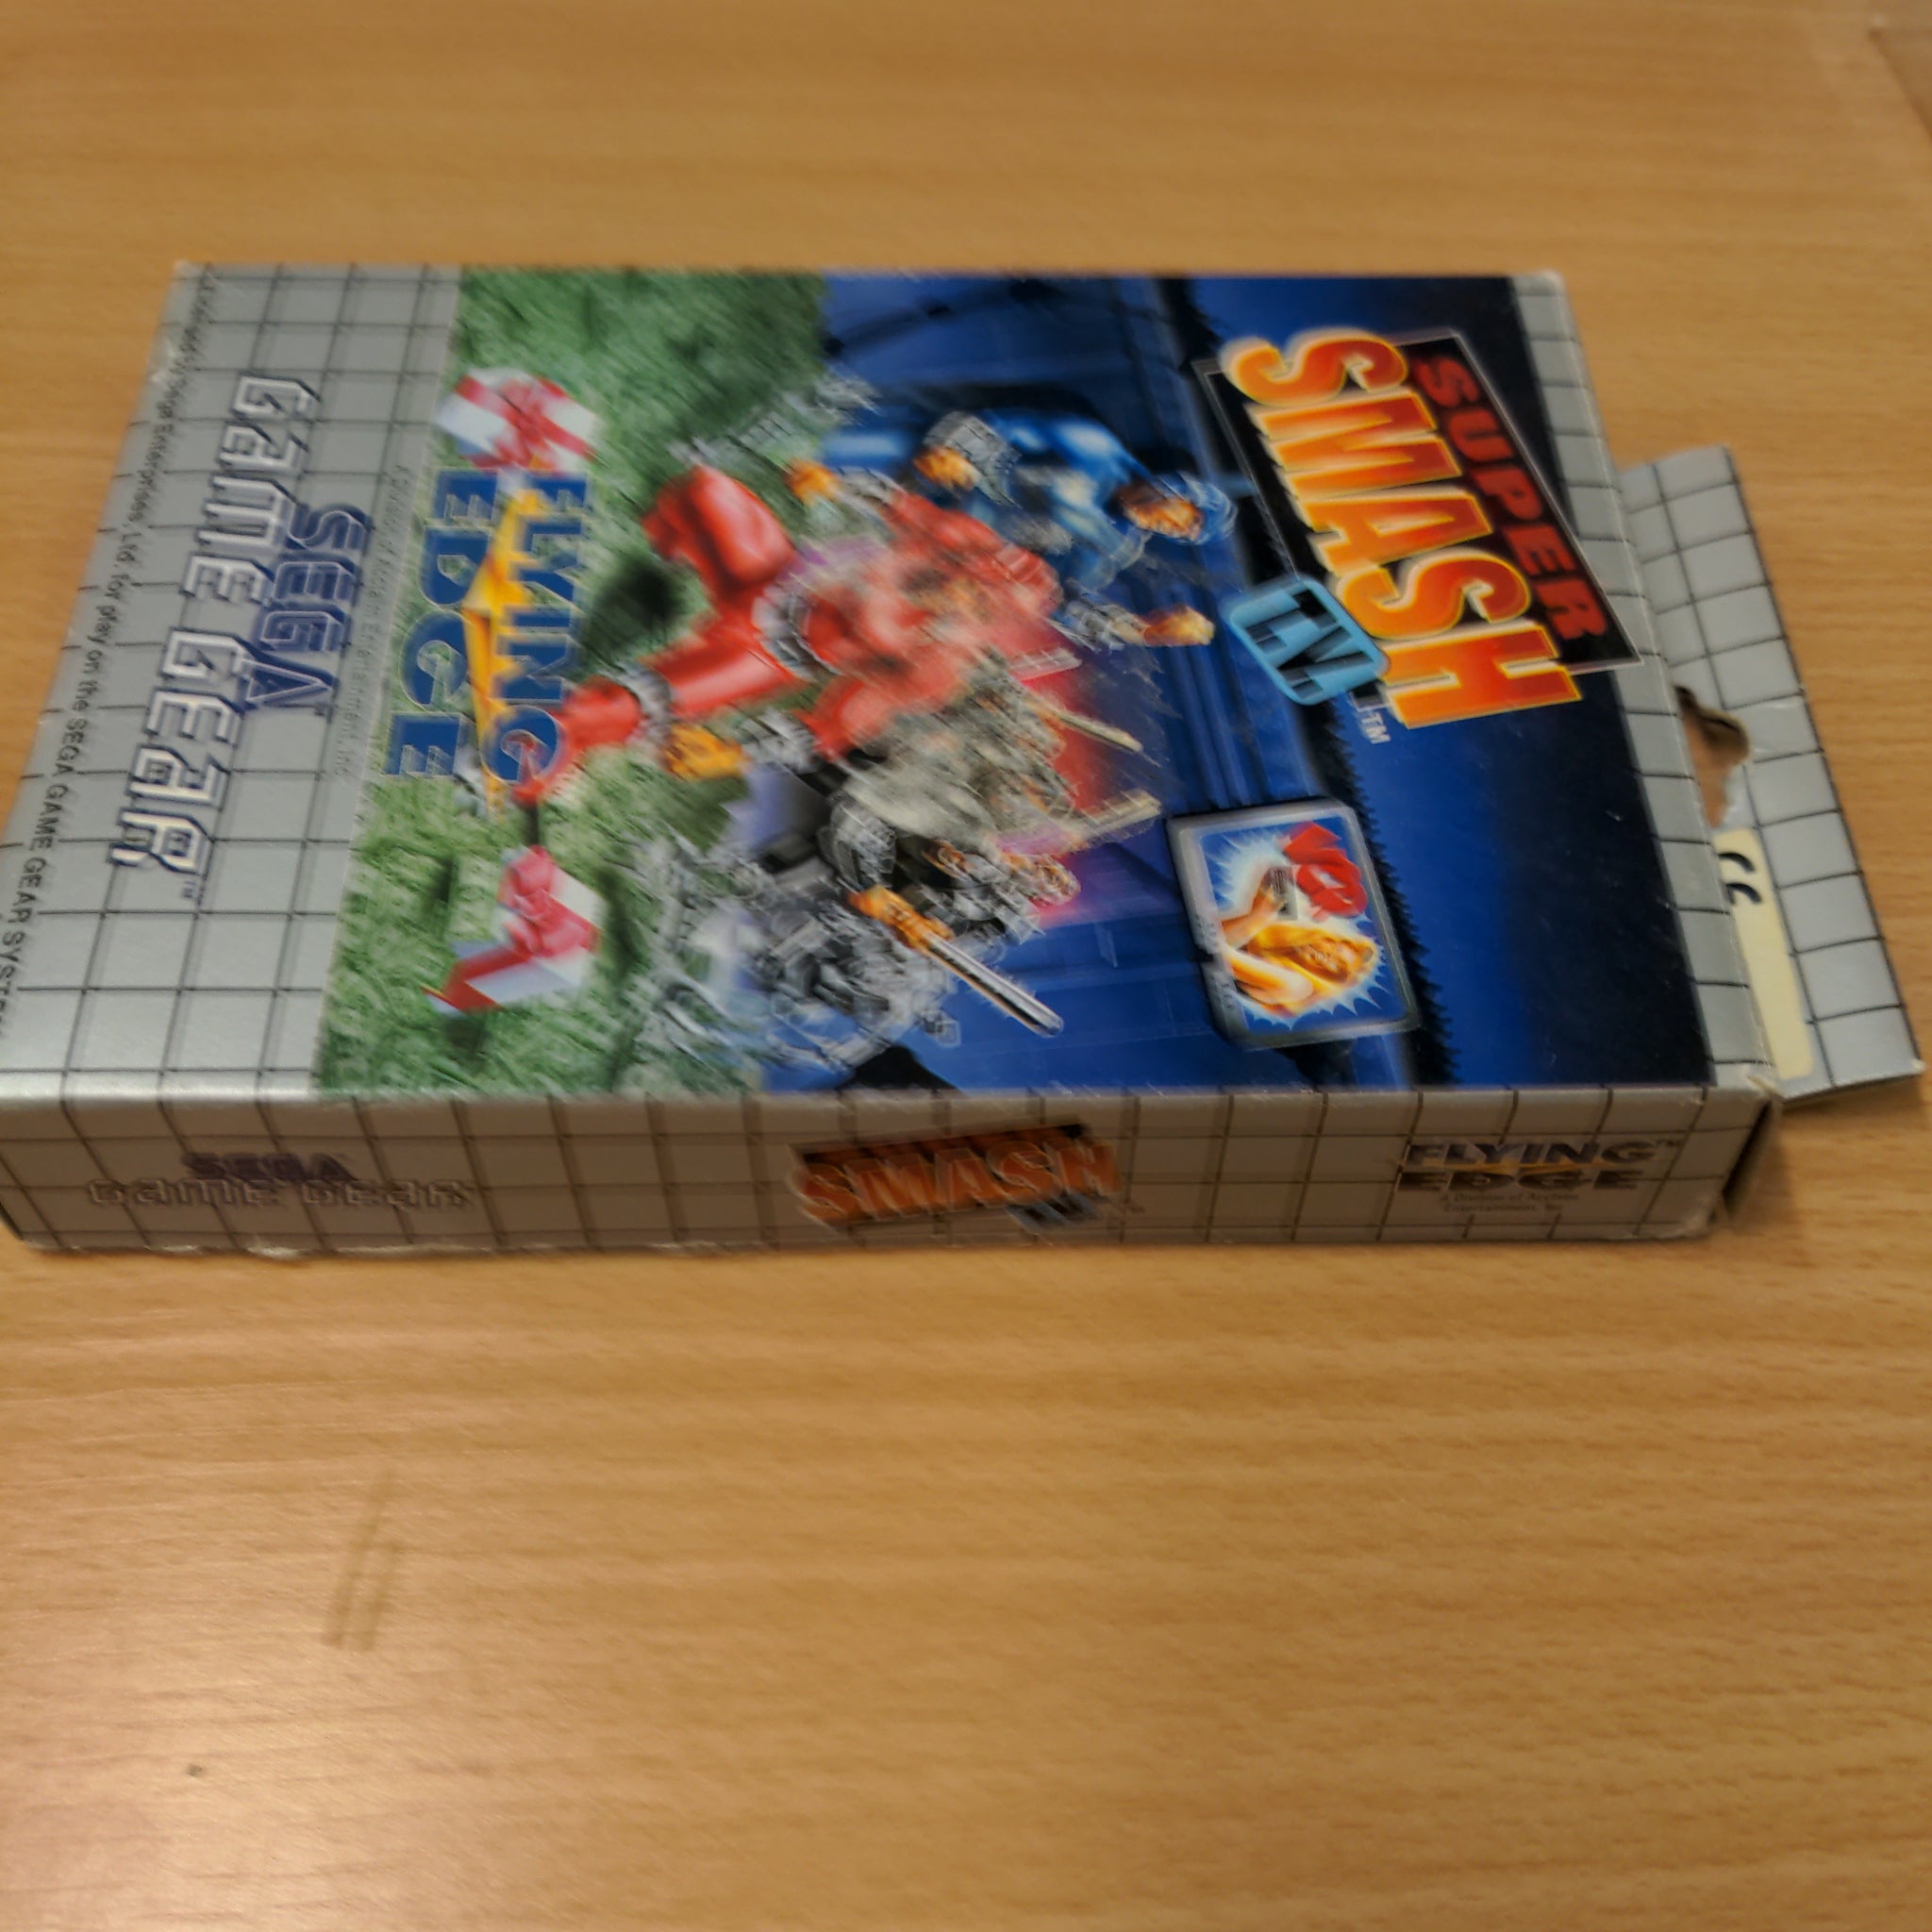 Super Smash TV Sega Game Gear game boxed